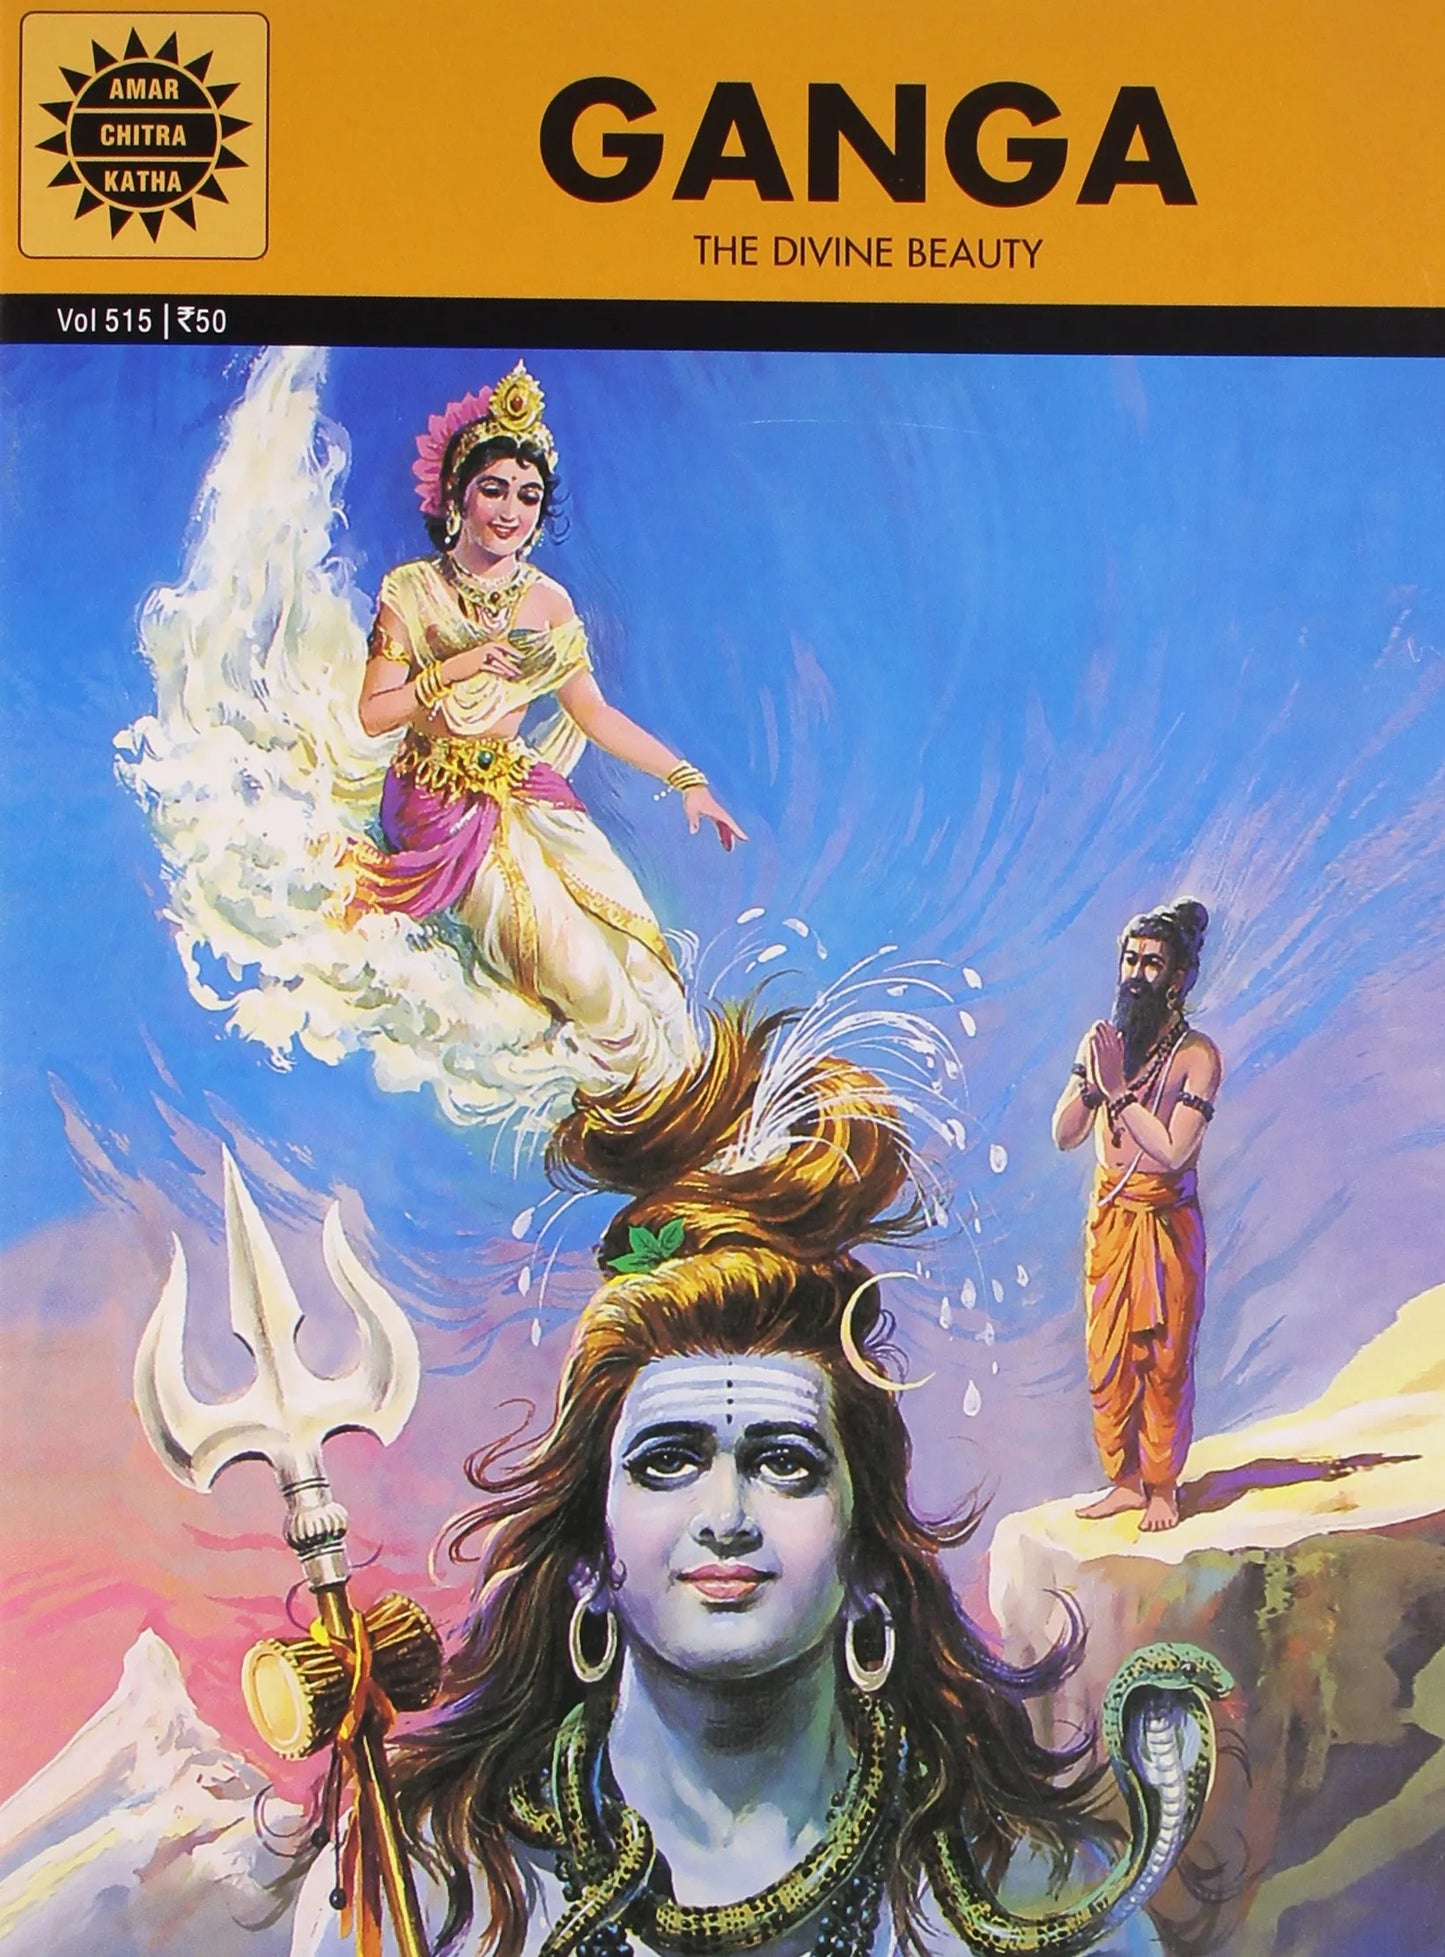 Amar Chitra Katha - Ganga - The Divine Beauty - Epics and Mythology